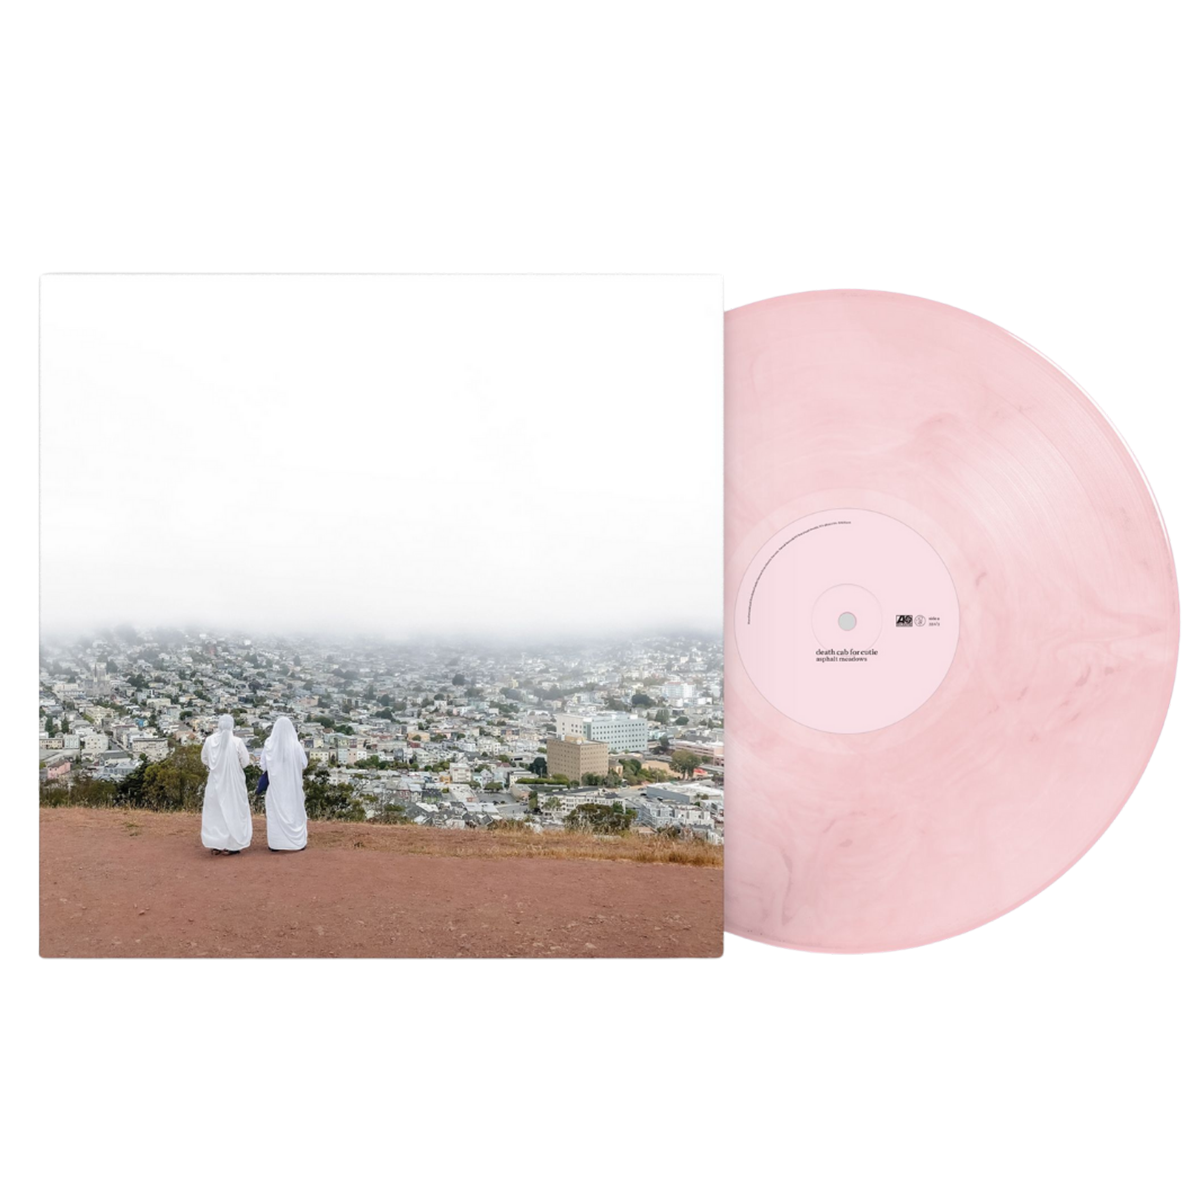 Asphalt Meadows Opaque Pink Galaxy 180 Gram Vinyl